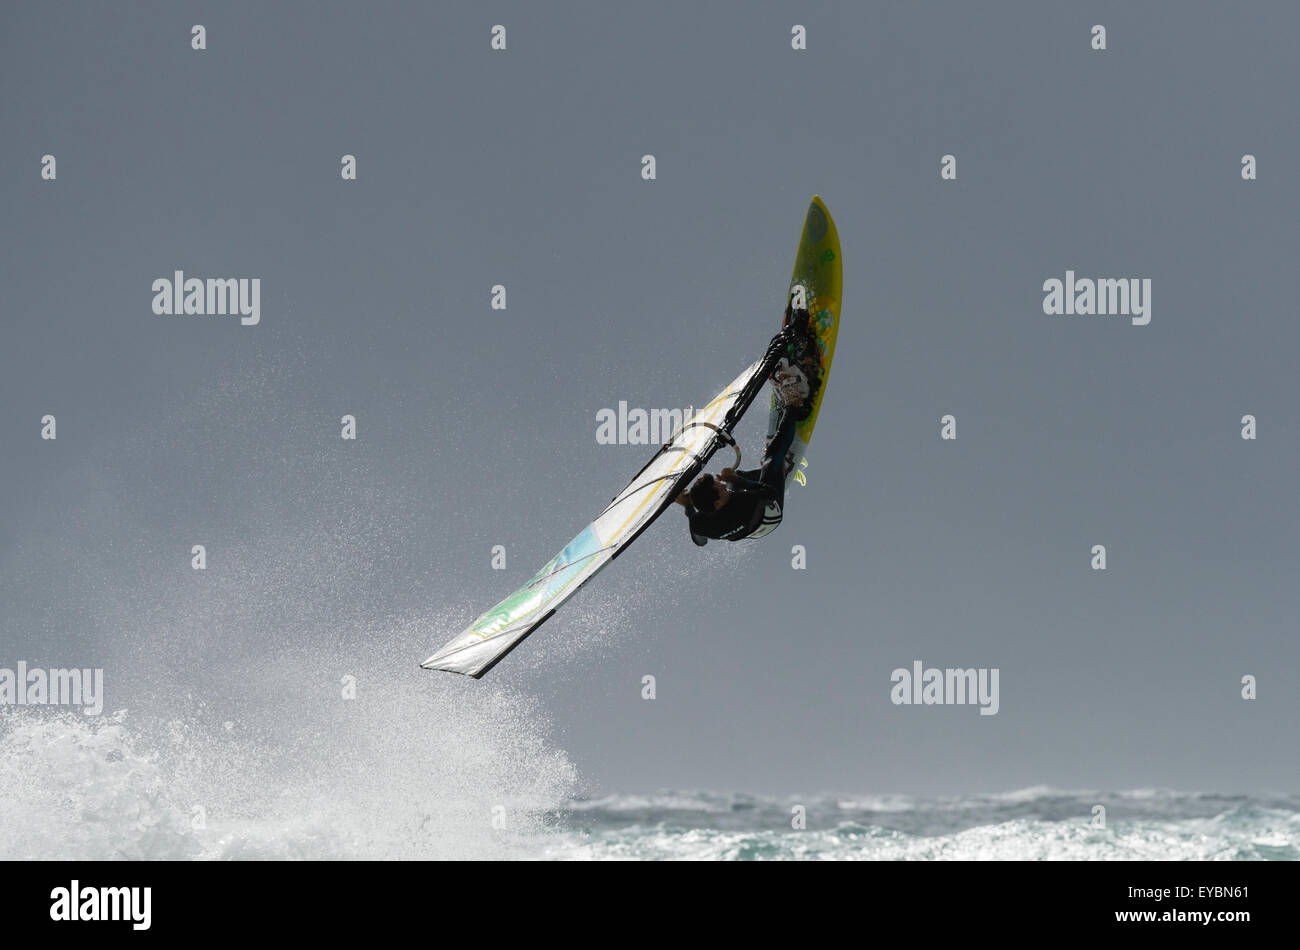 Windsurfing action. Tarifa, Cadiz, Costa de la Luz, Andalucia, Southern Spain. Stock Photo